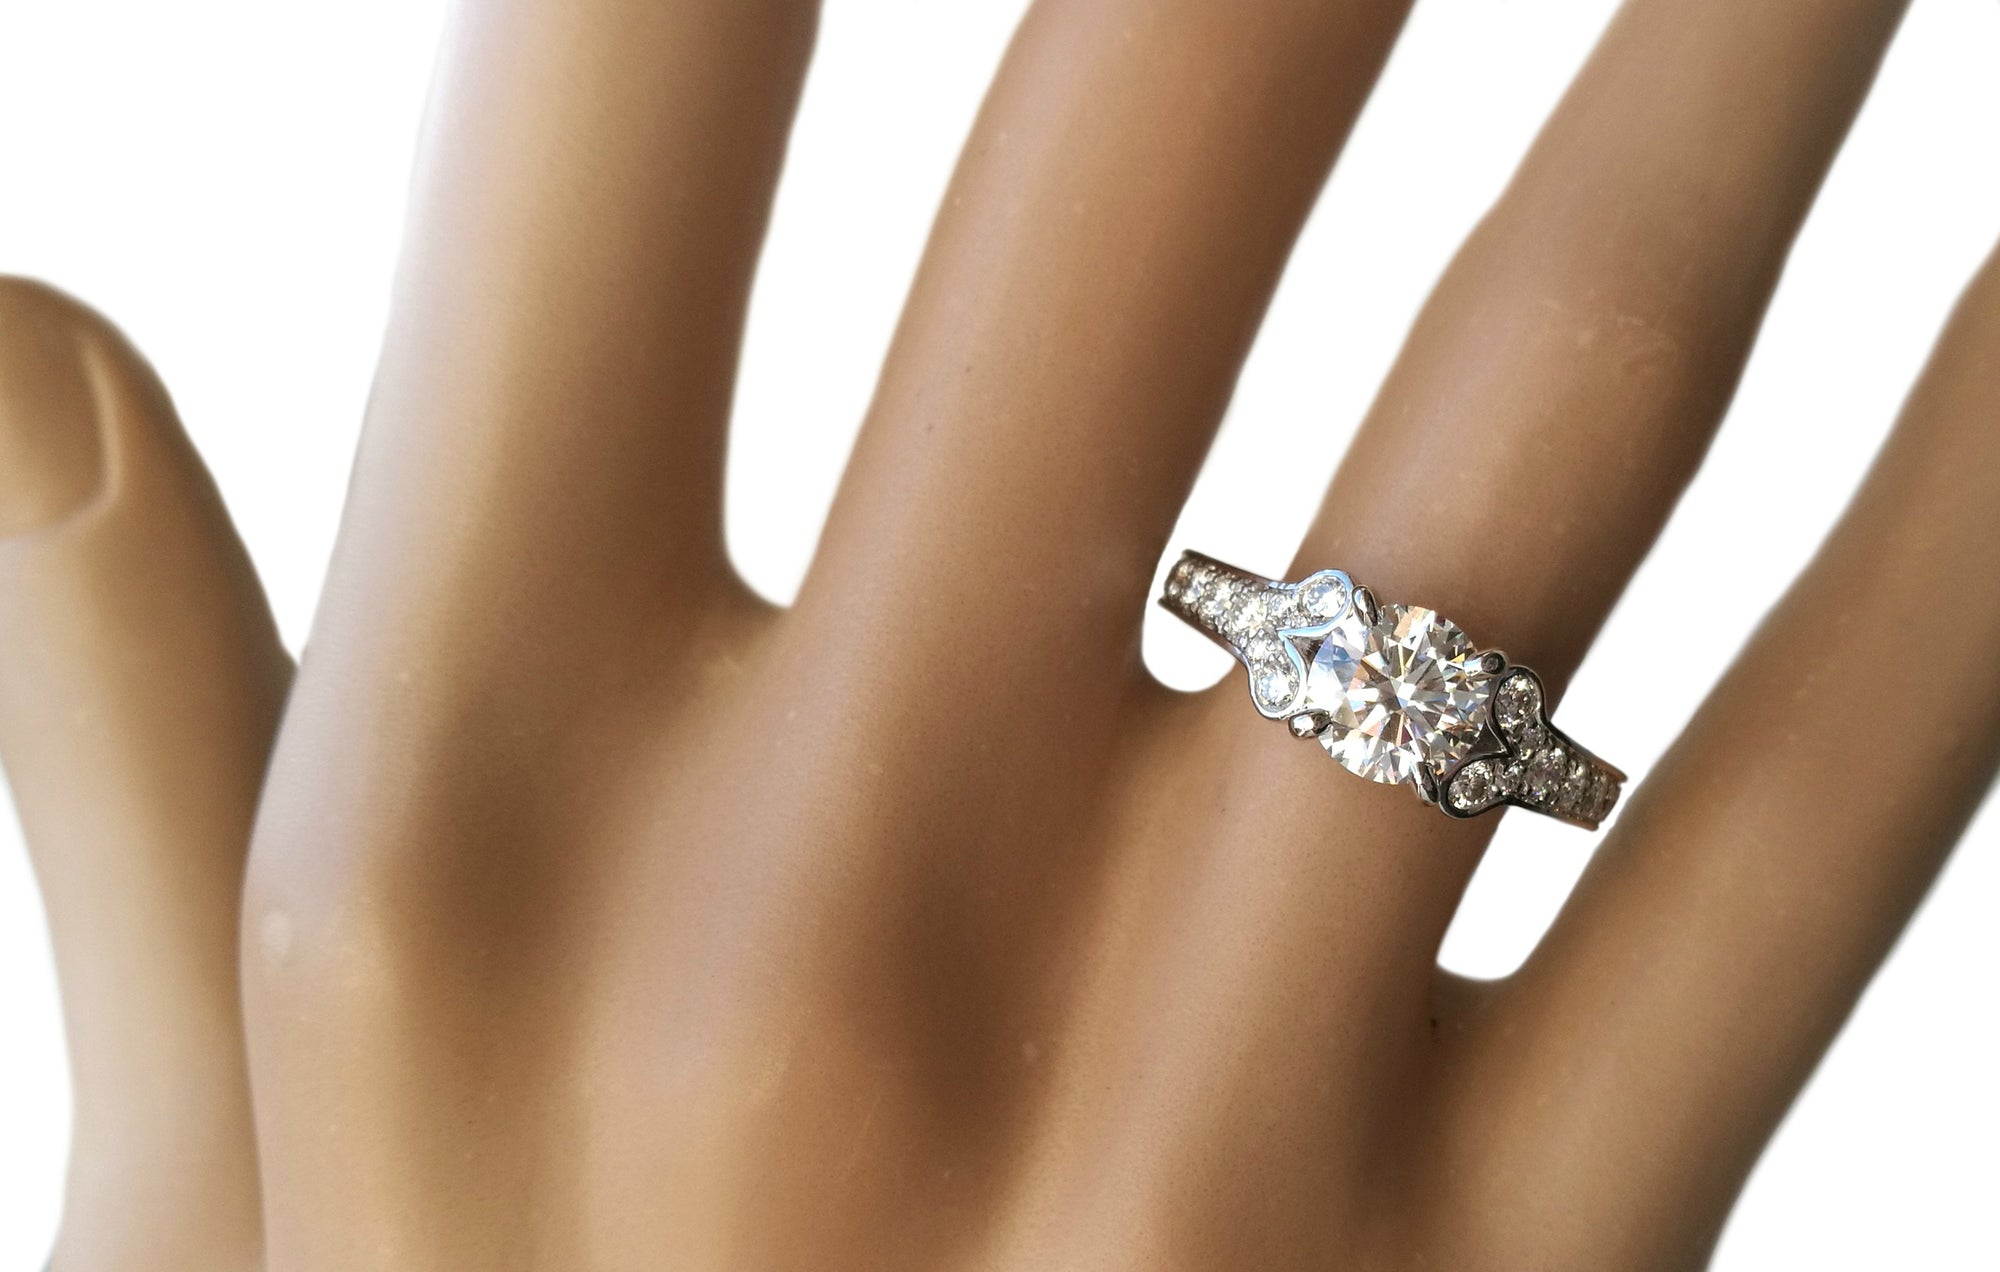 Cartier 1.18ct E/VVS1 Triple-X Ballerine Round Brilliant Diamond Engagement Ring on finger